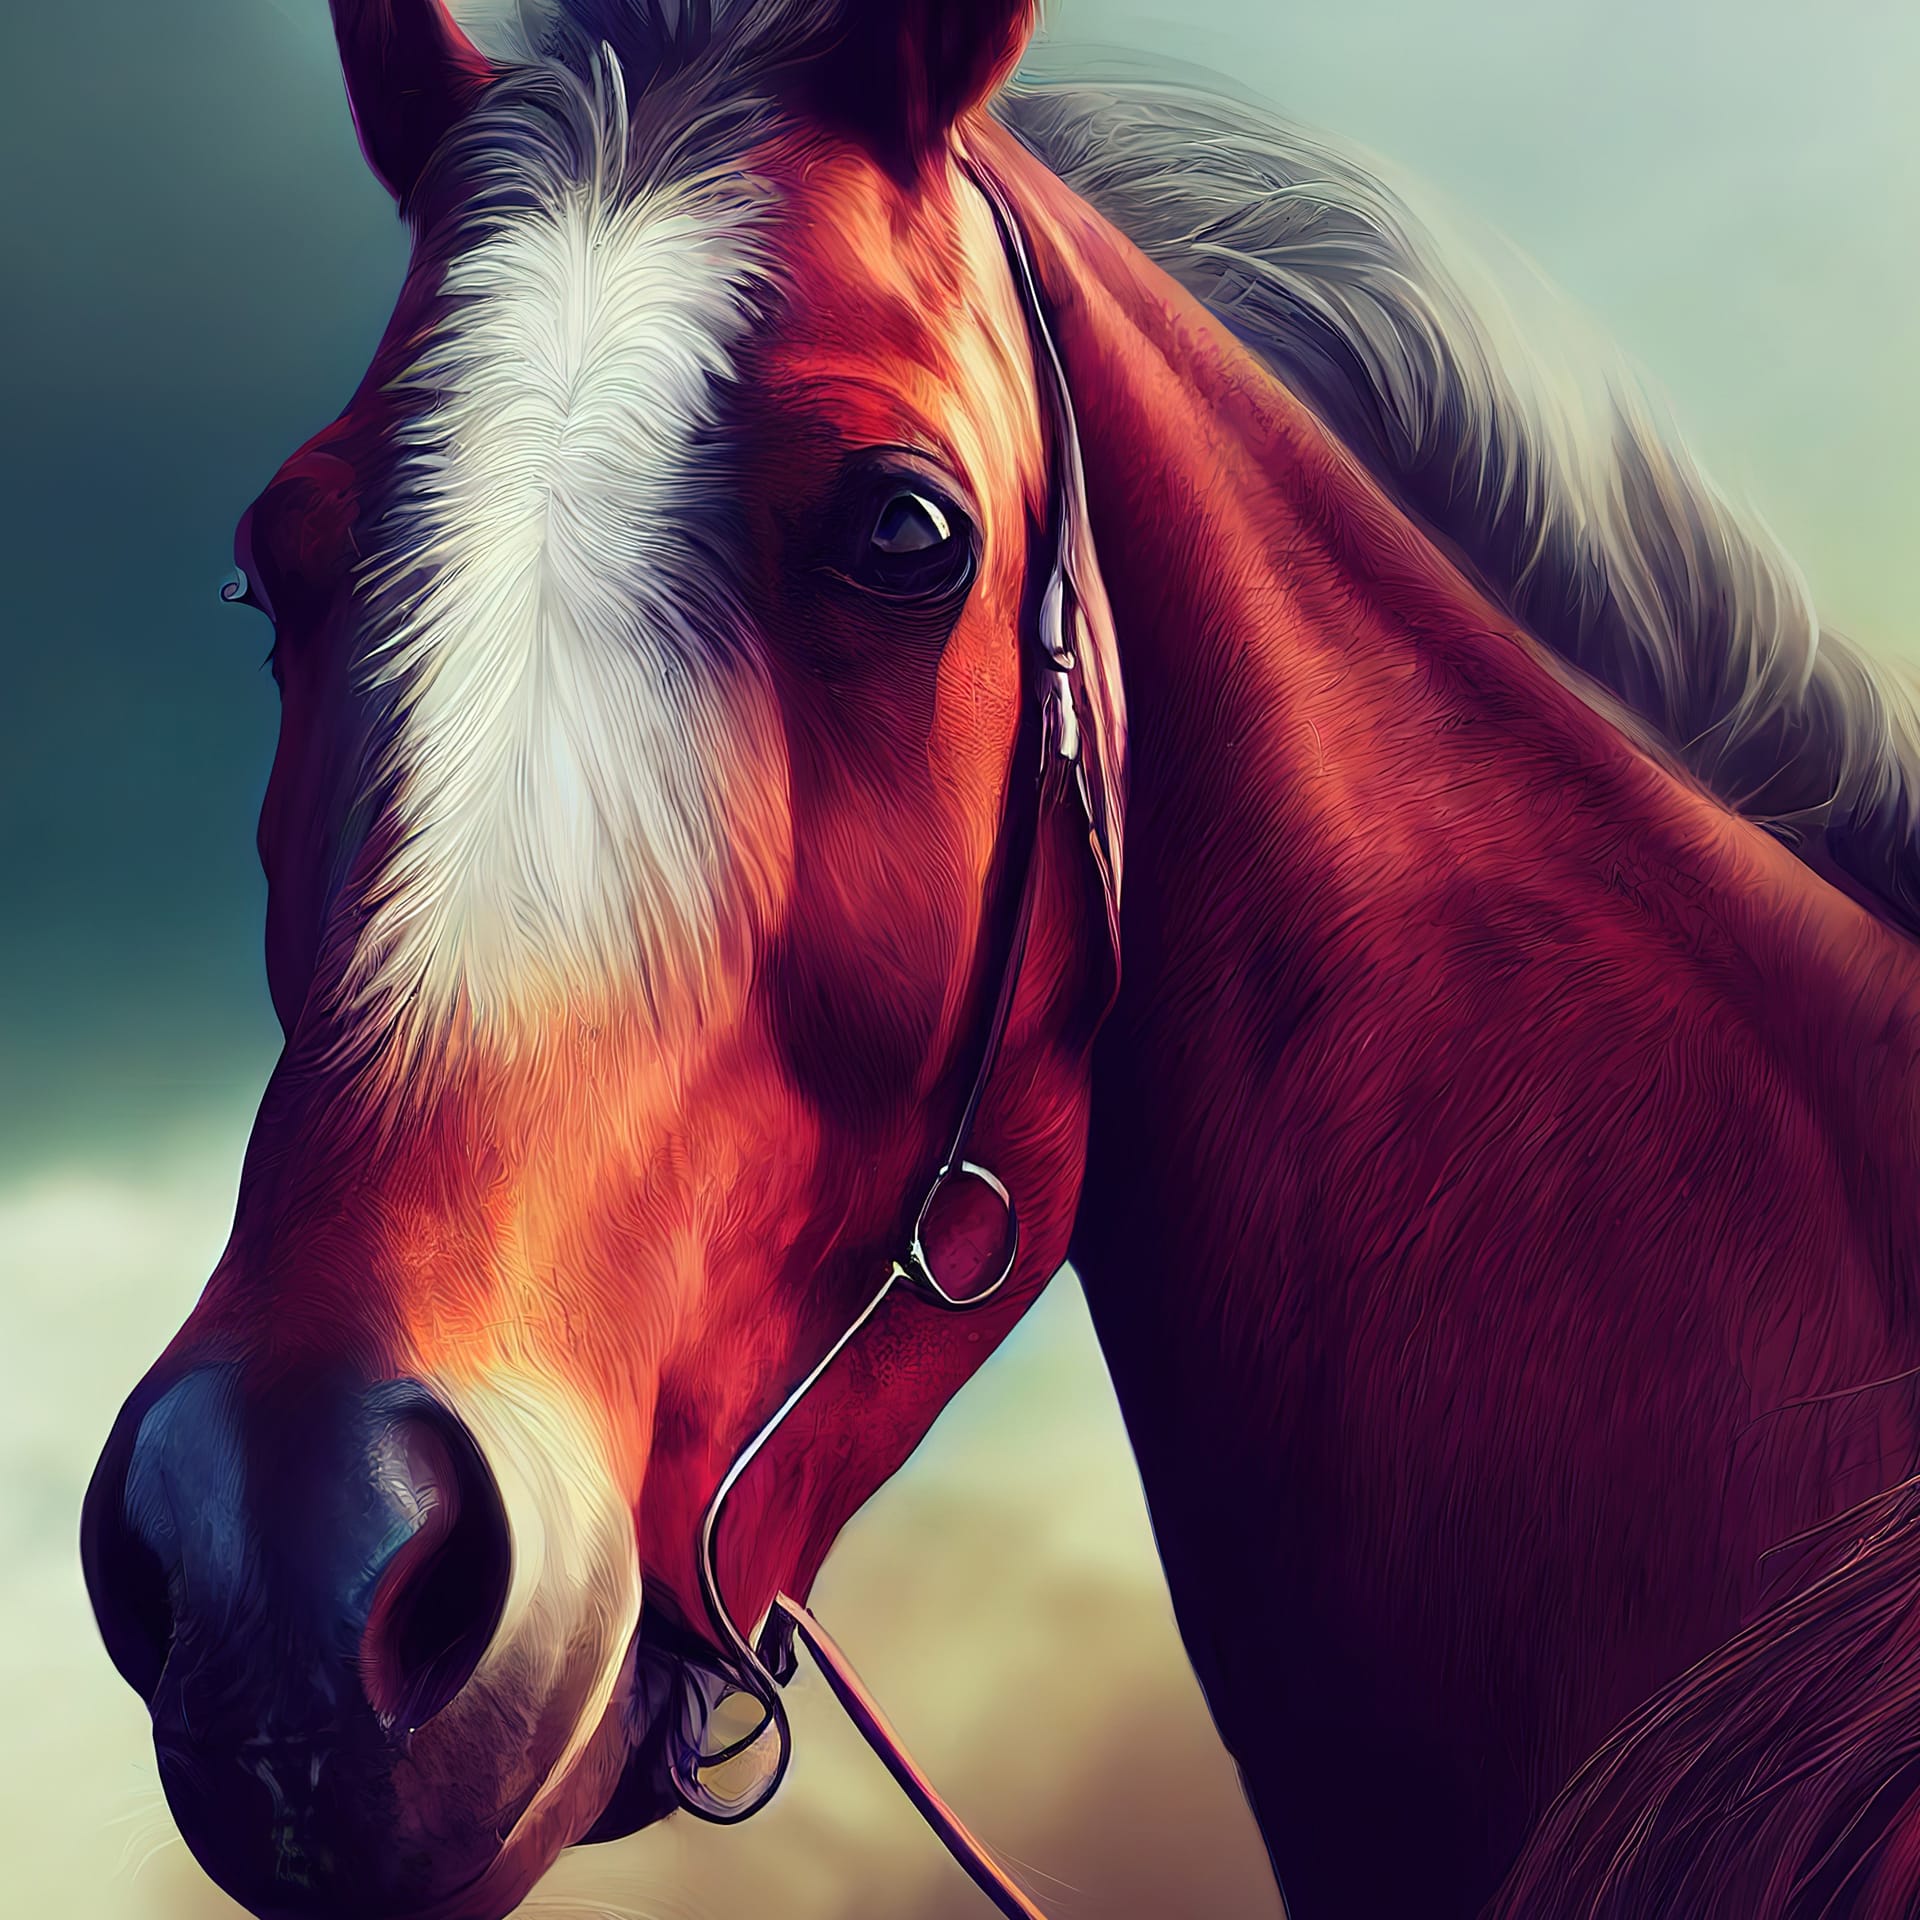 Horse animal portrait horse digital art style illustration painting